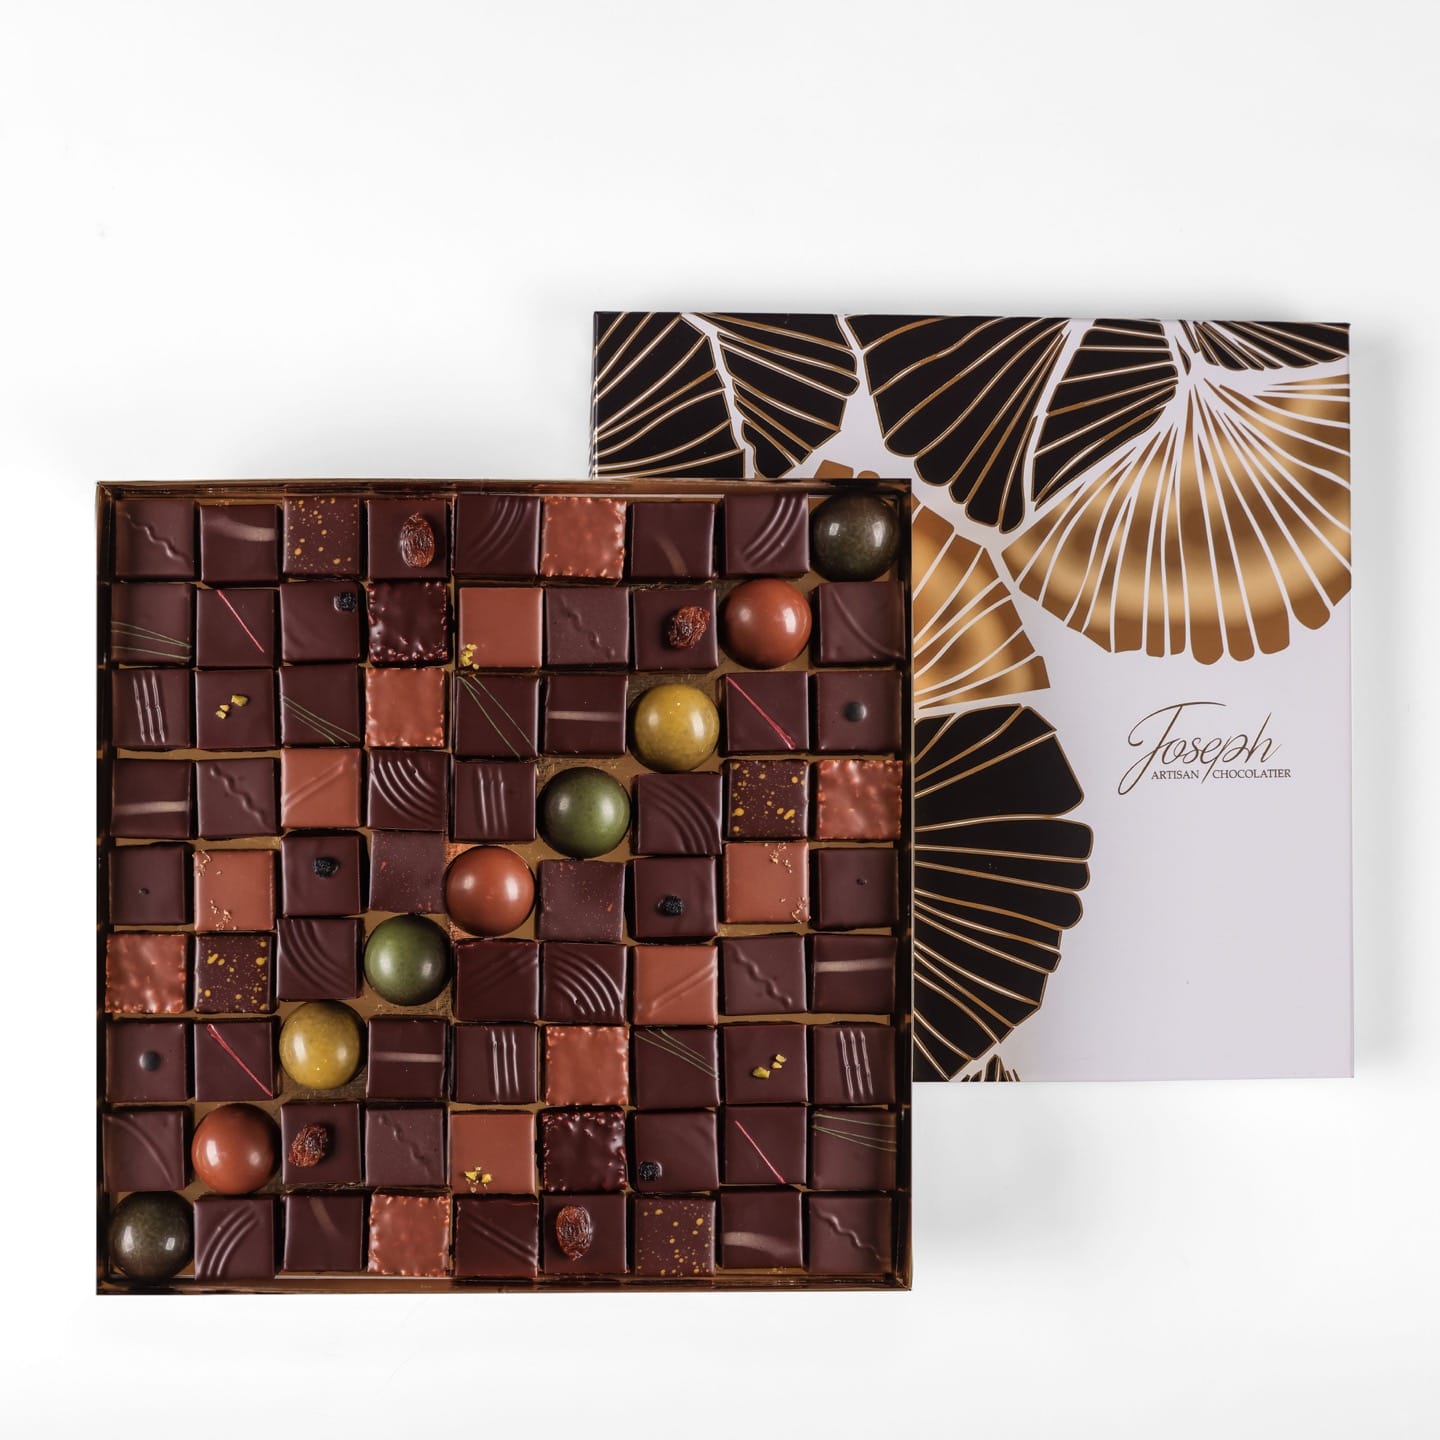 Joseph • Assortiment Chocolats Noir Noël 680g - 81 pièces